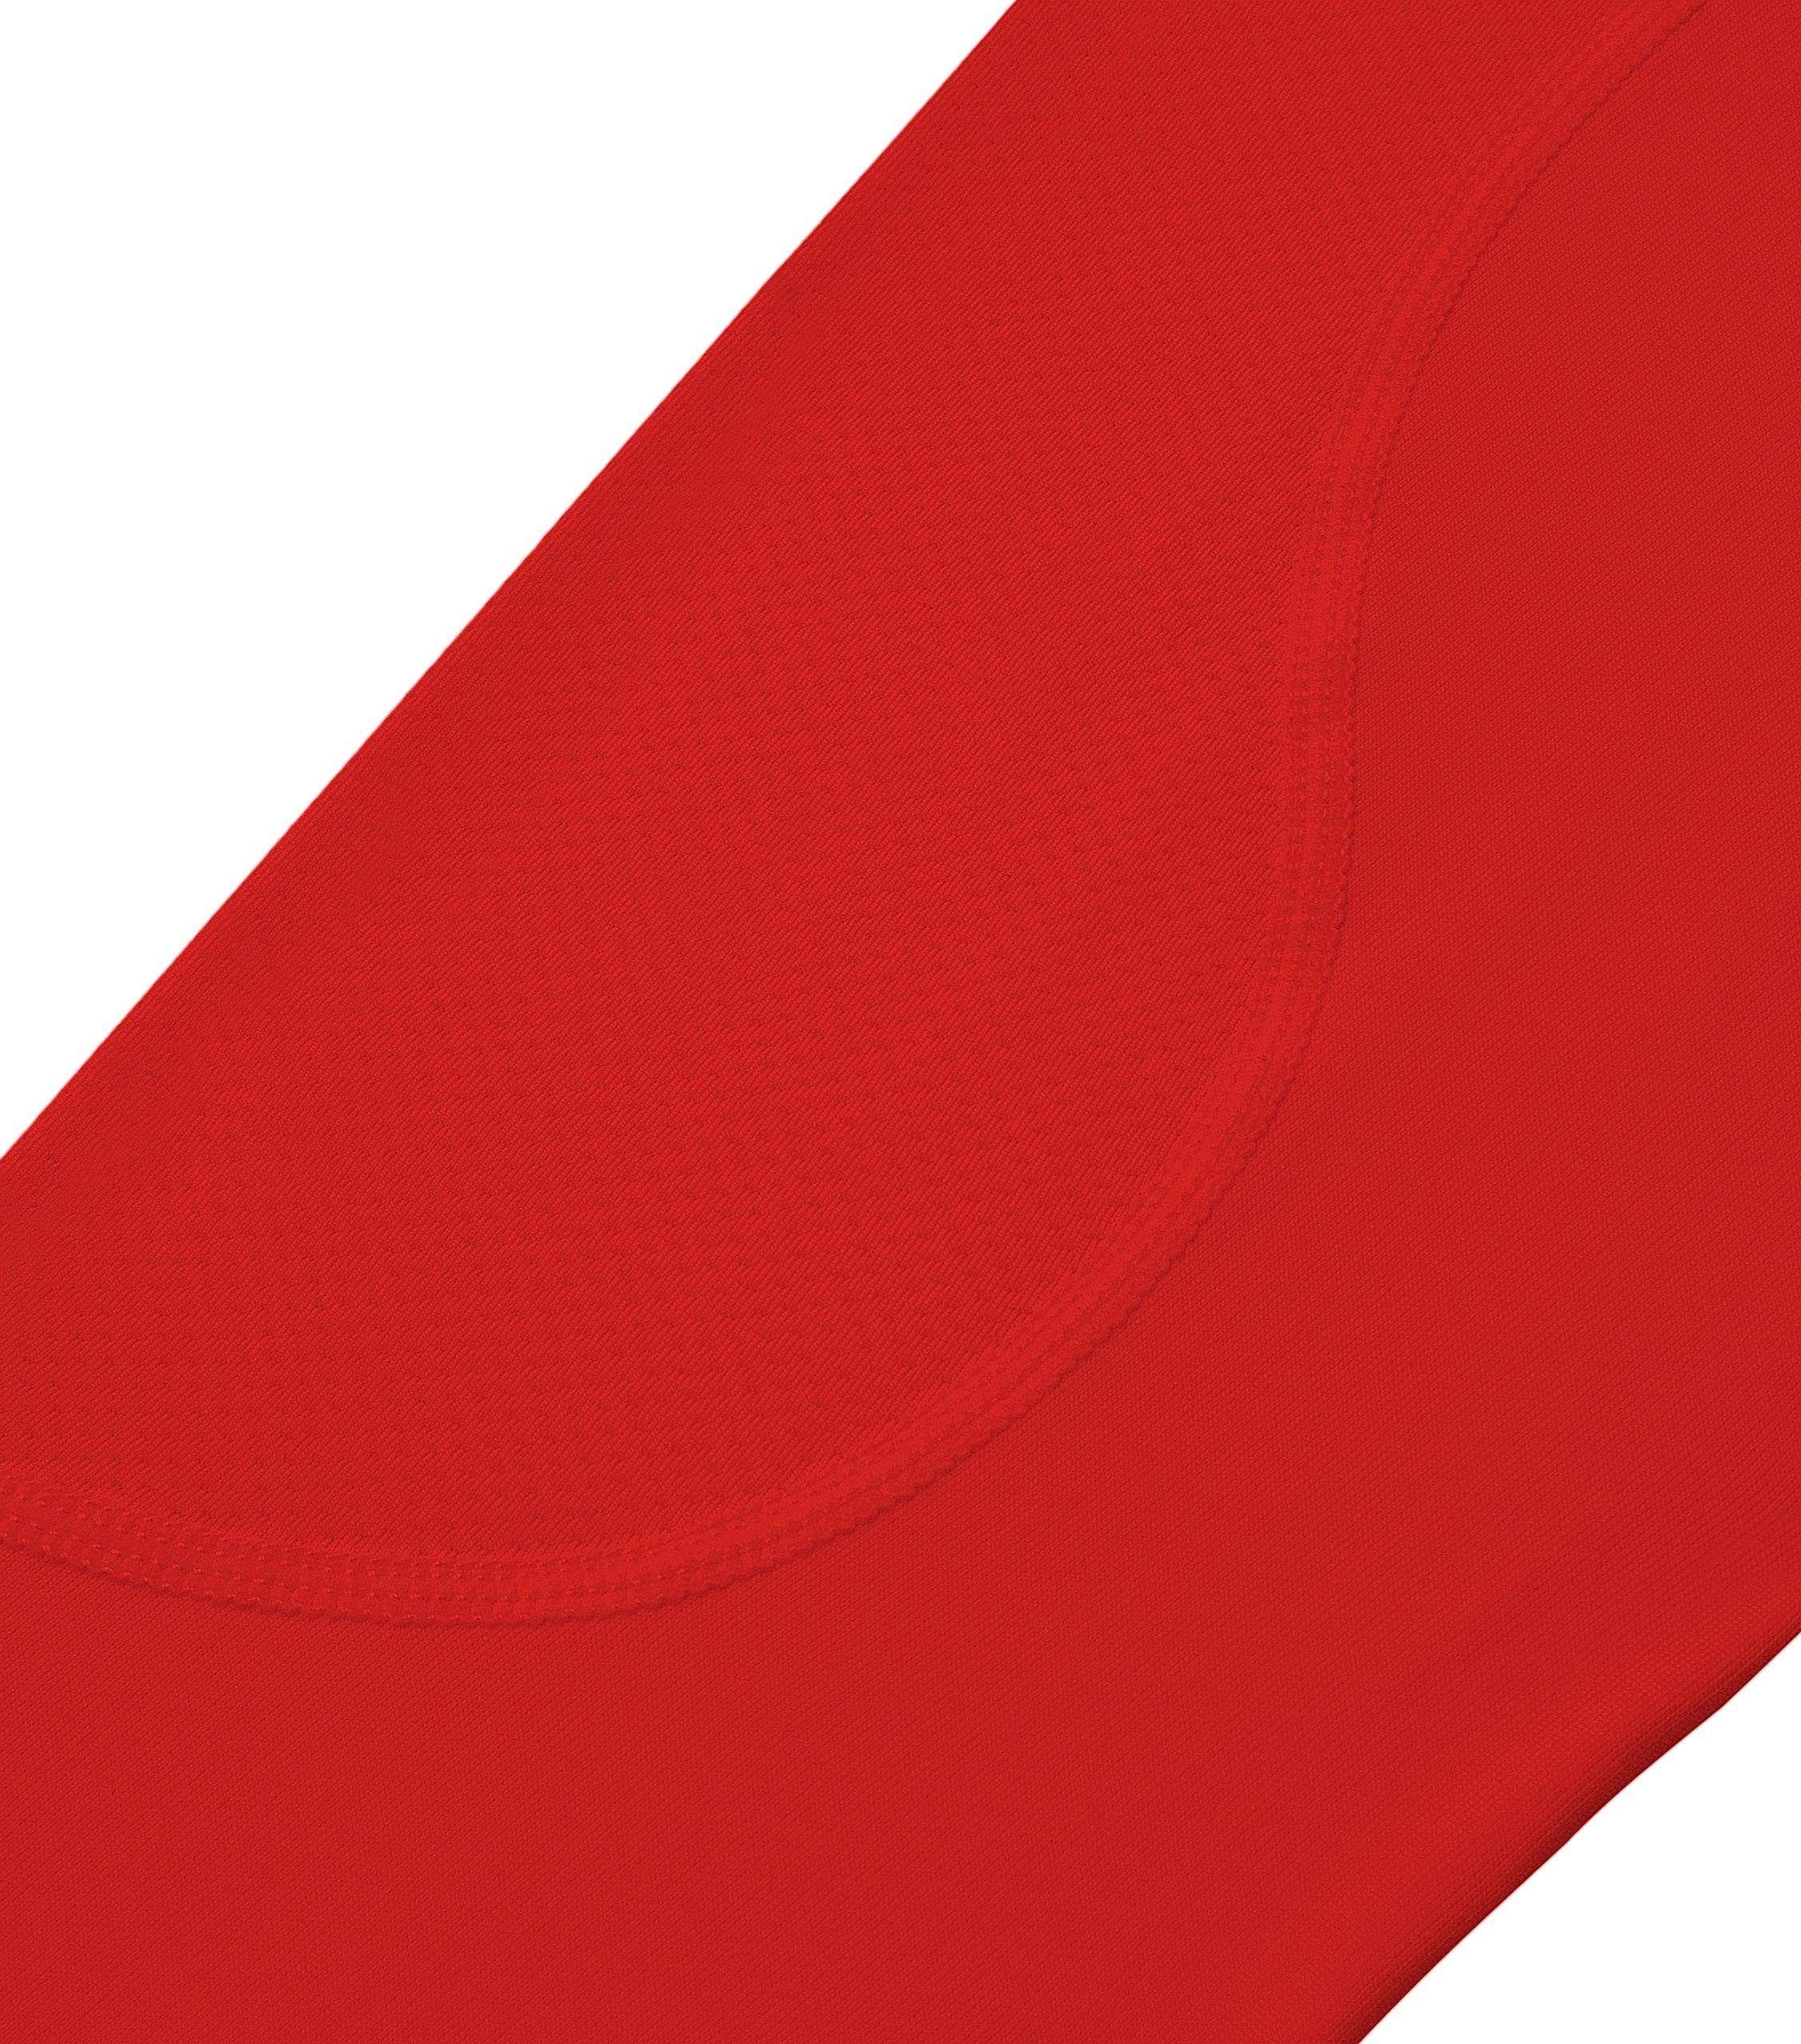 TCA Langarmshirt TCA Herren Kompressionsshirt - Sportshirt Rot Langarm Atmungsaktiv